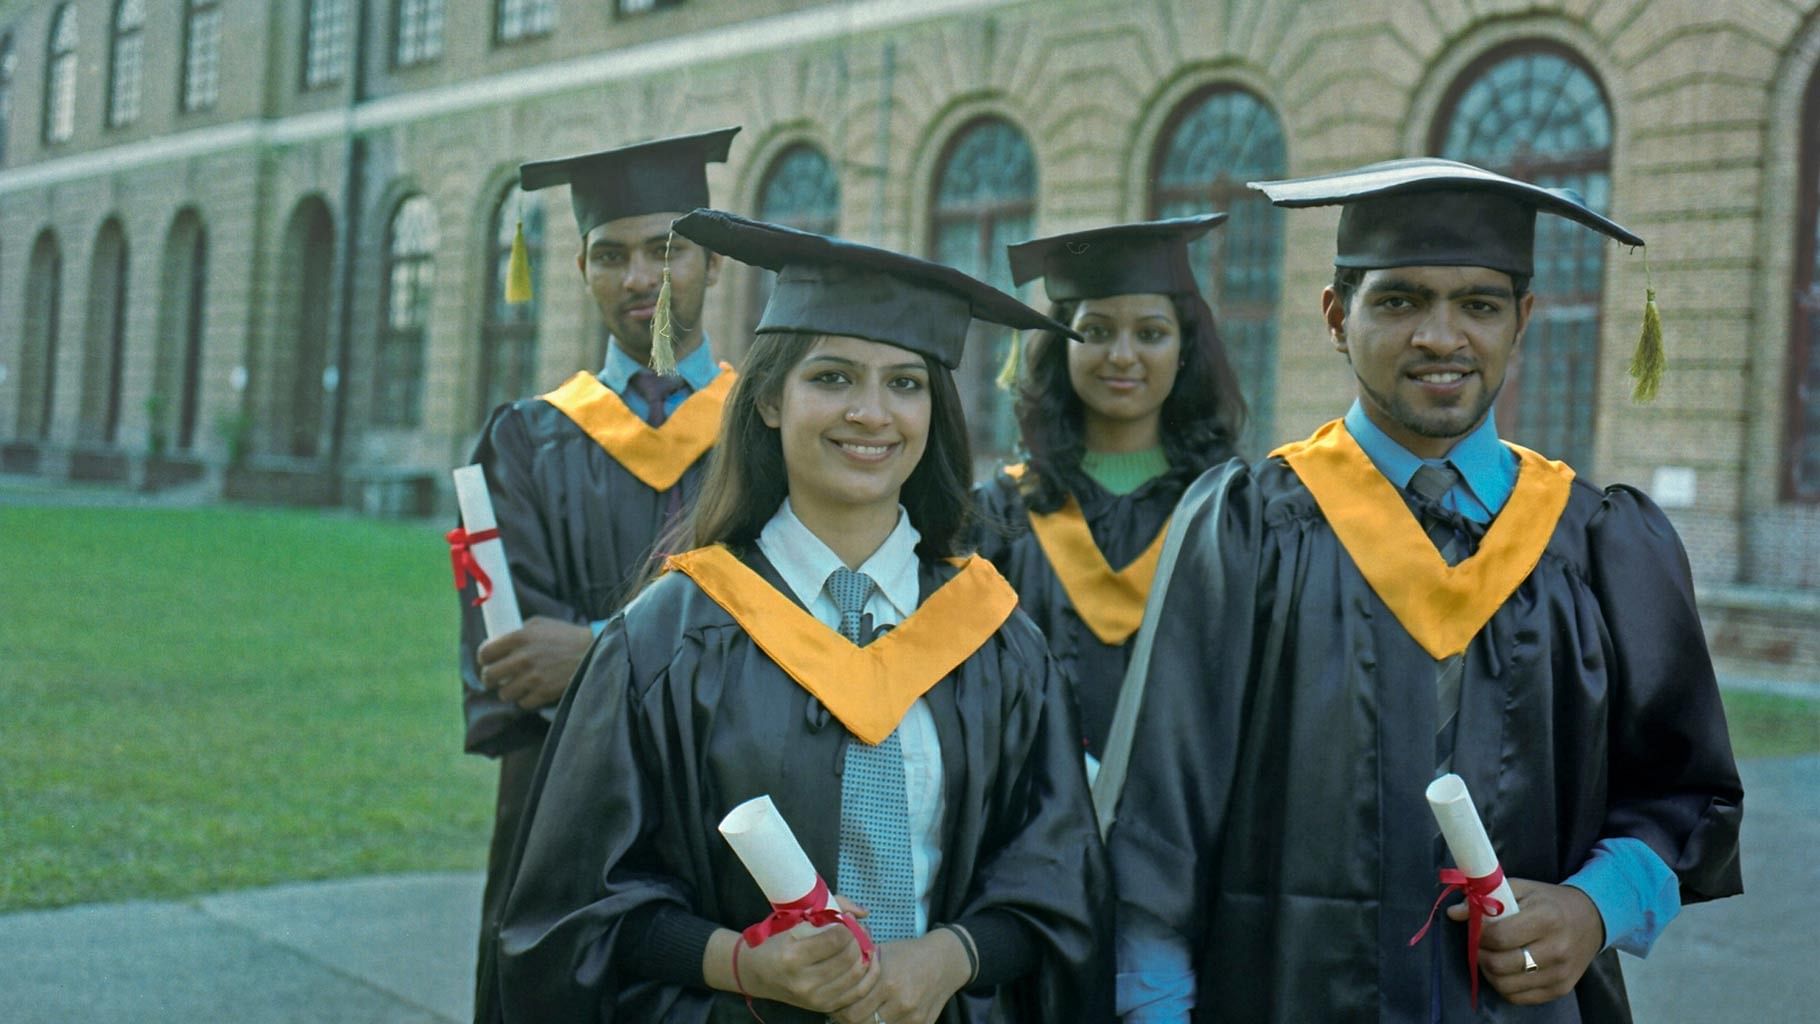 Representational image of Indian students. (Photo: iStockphoto)